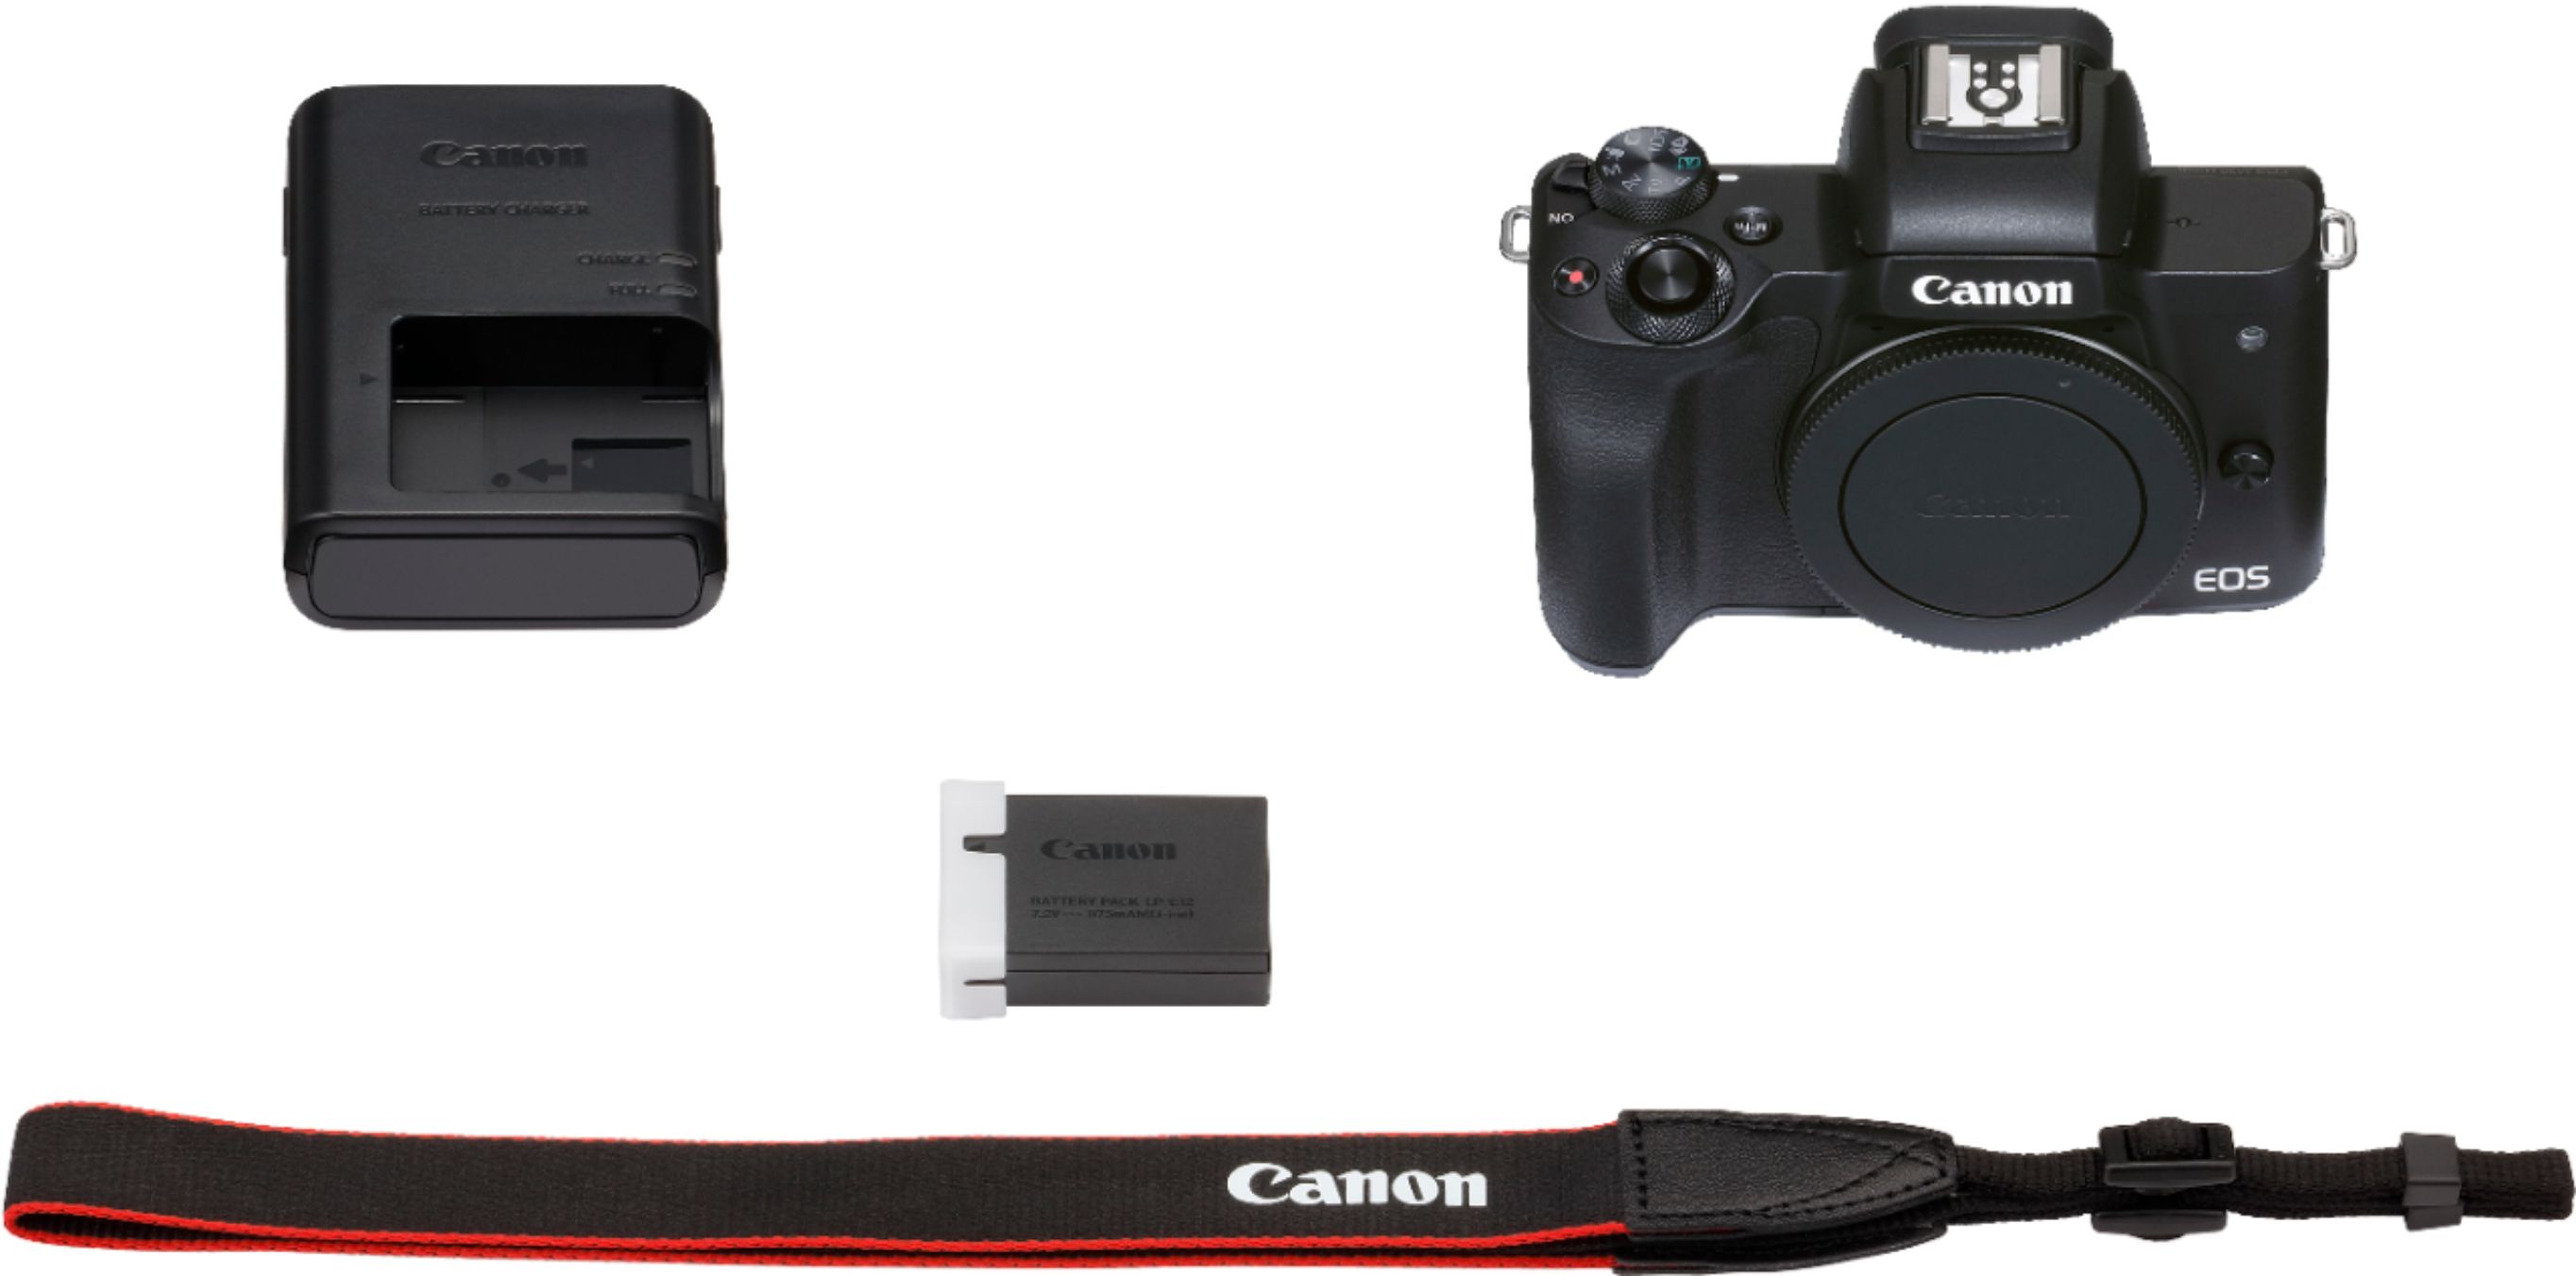 Canon EOS M50 Mirrorless Digital Camera Body - Black 2680C001